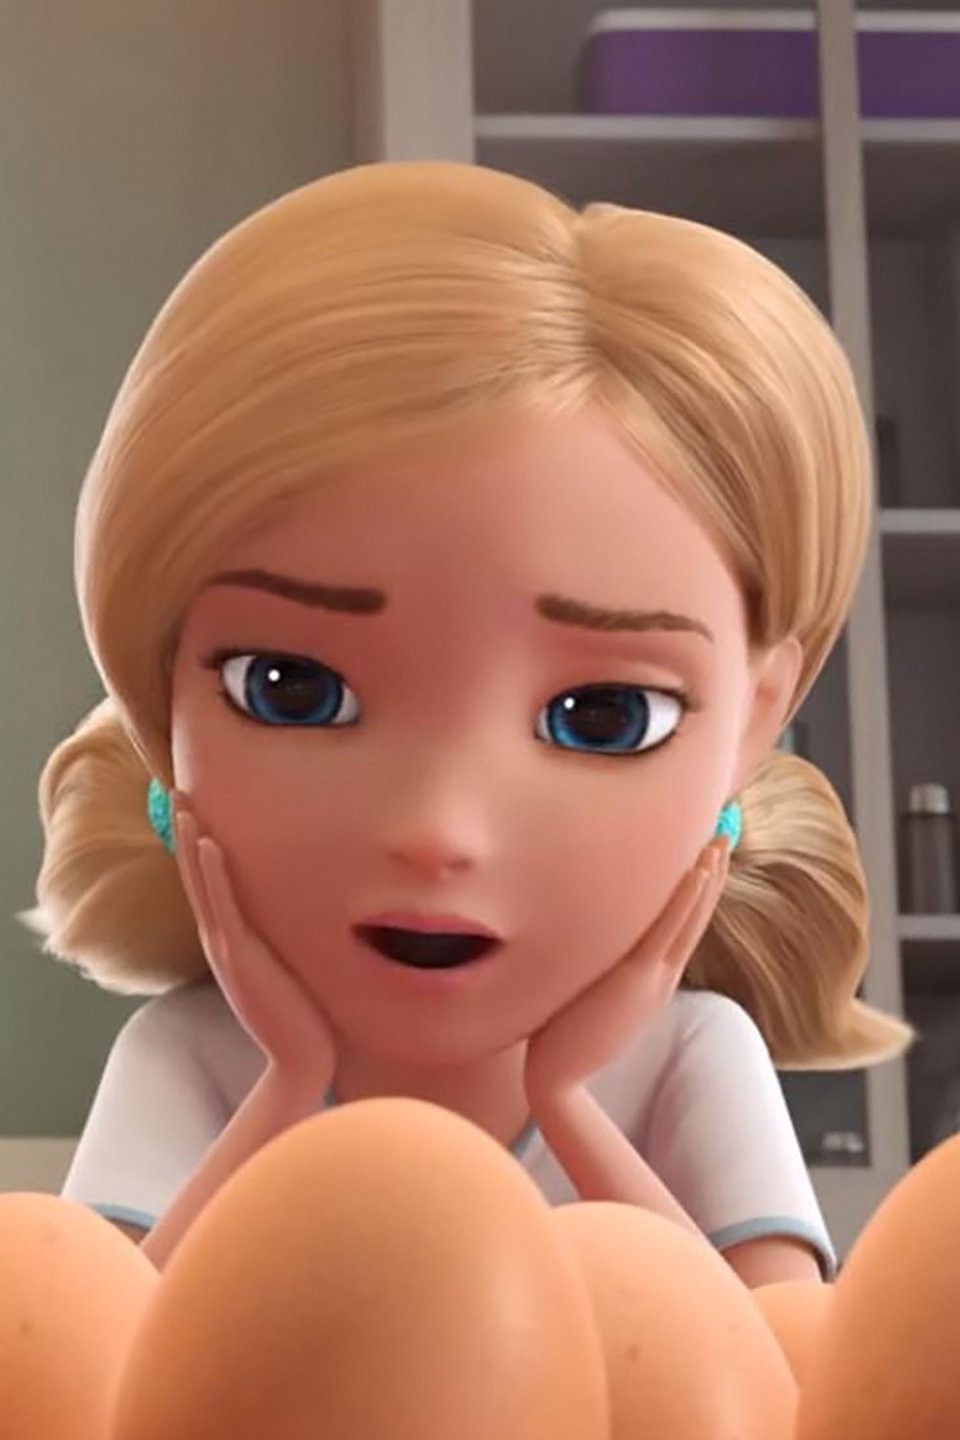 Barbie Dreamtopia: Season 1, Episode 11 - Rotten Tomatoes